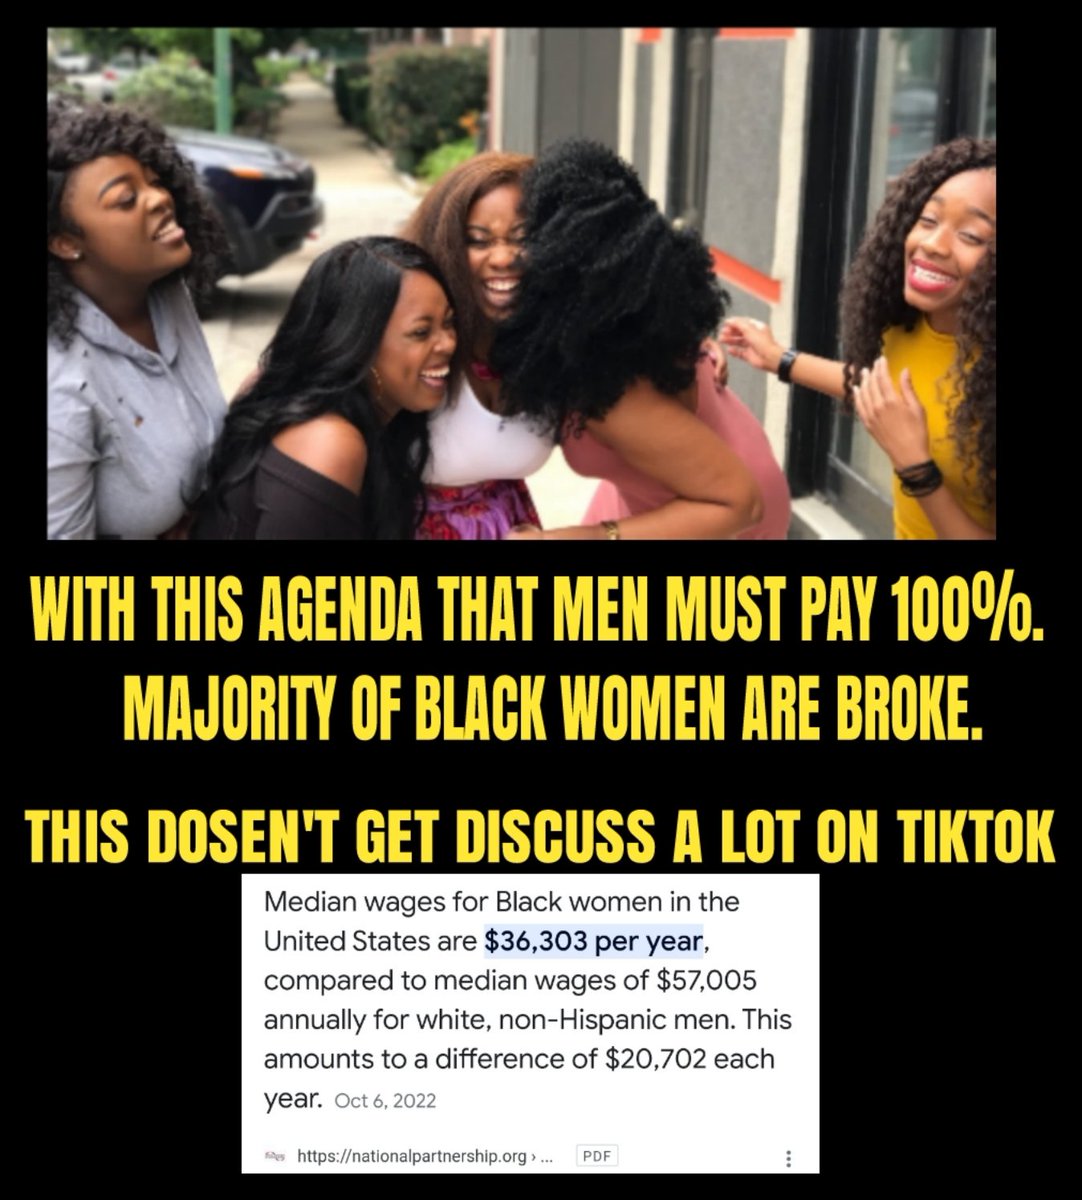 #sprinklesprinkle #blackwomen #BlackGirlMagic #BlackGirlsMagic
#blackgirltrain #BlackGirlsRock
#blackmen #BlackgirlsTikTok #BLM
#BlackExcellence #BLACKQUEEN 
#blackgirls #blackgirl #men 
It's amazing how women want to go to a traditional man. 🙄